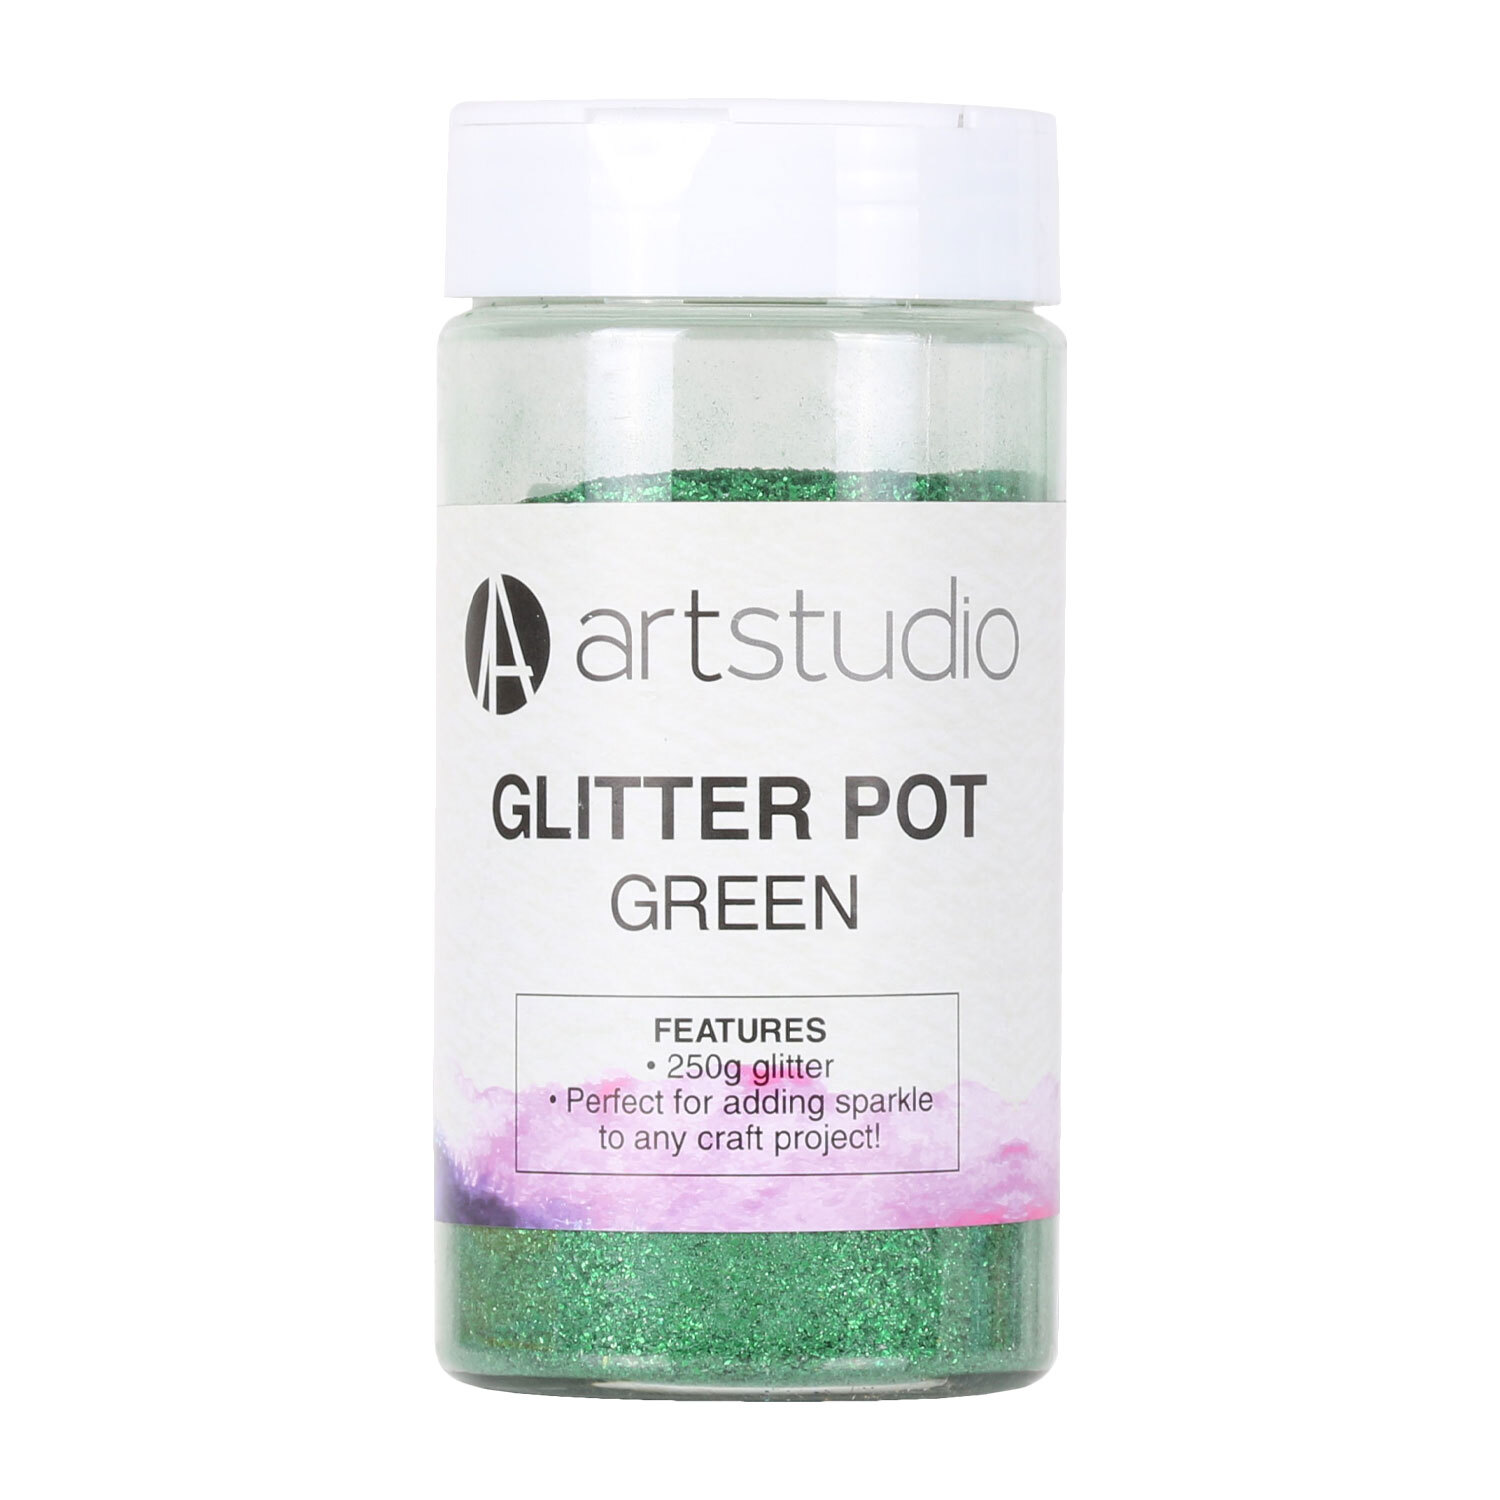 Art Studio Glitter Pot Red or Green Image 1